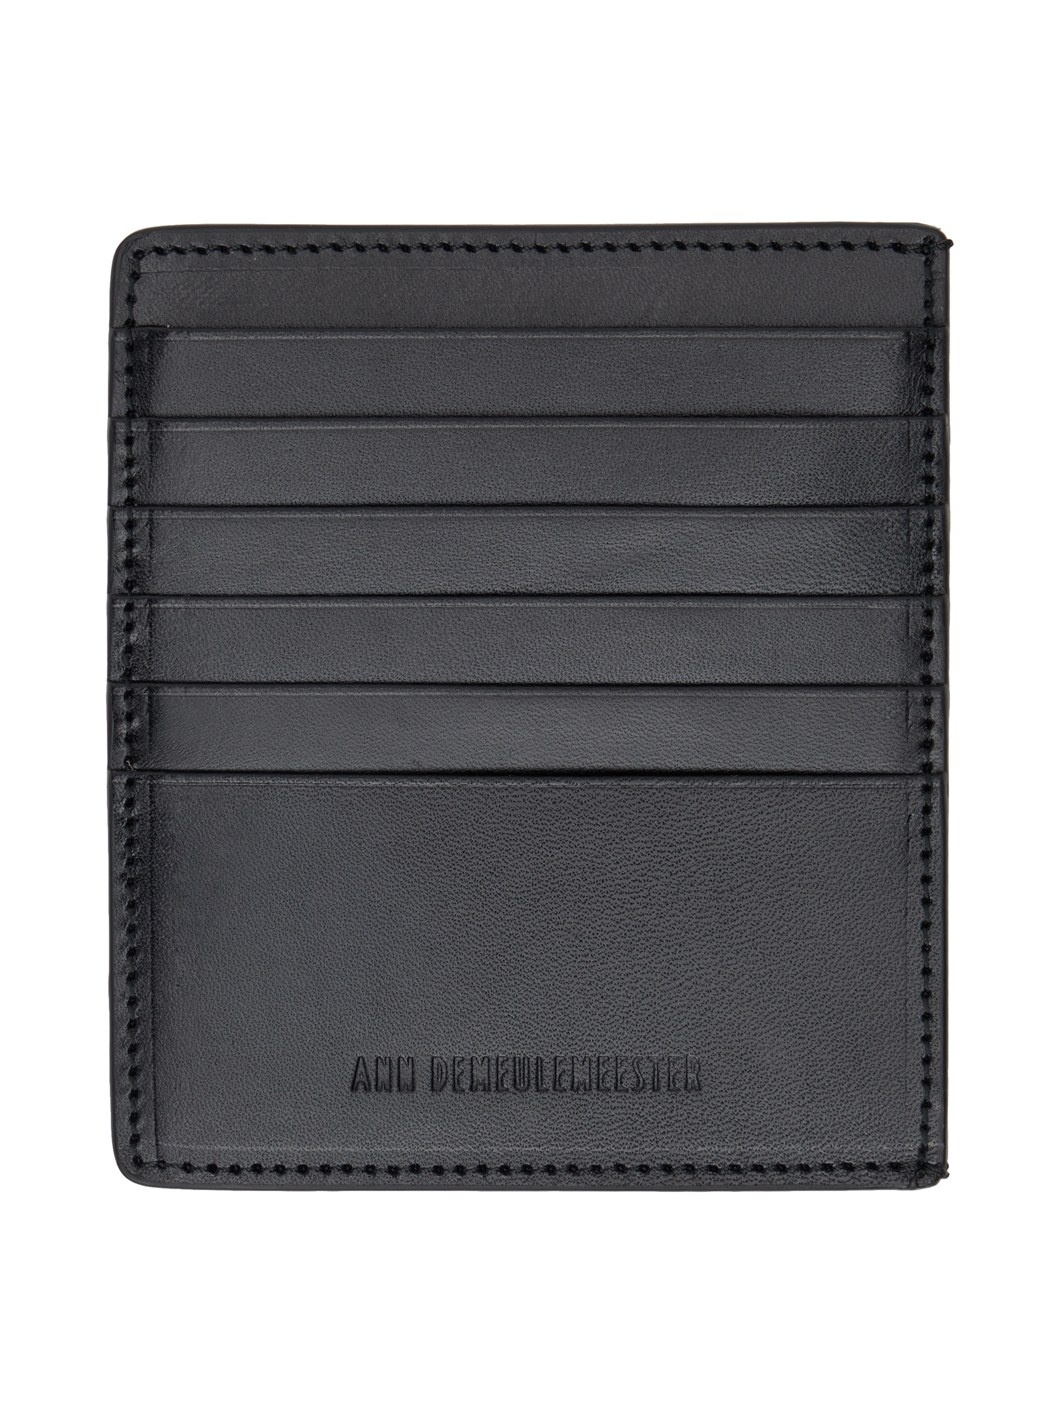 Black Squared Card Holder - 1